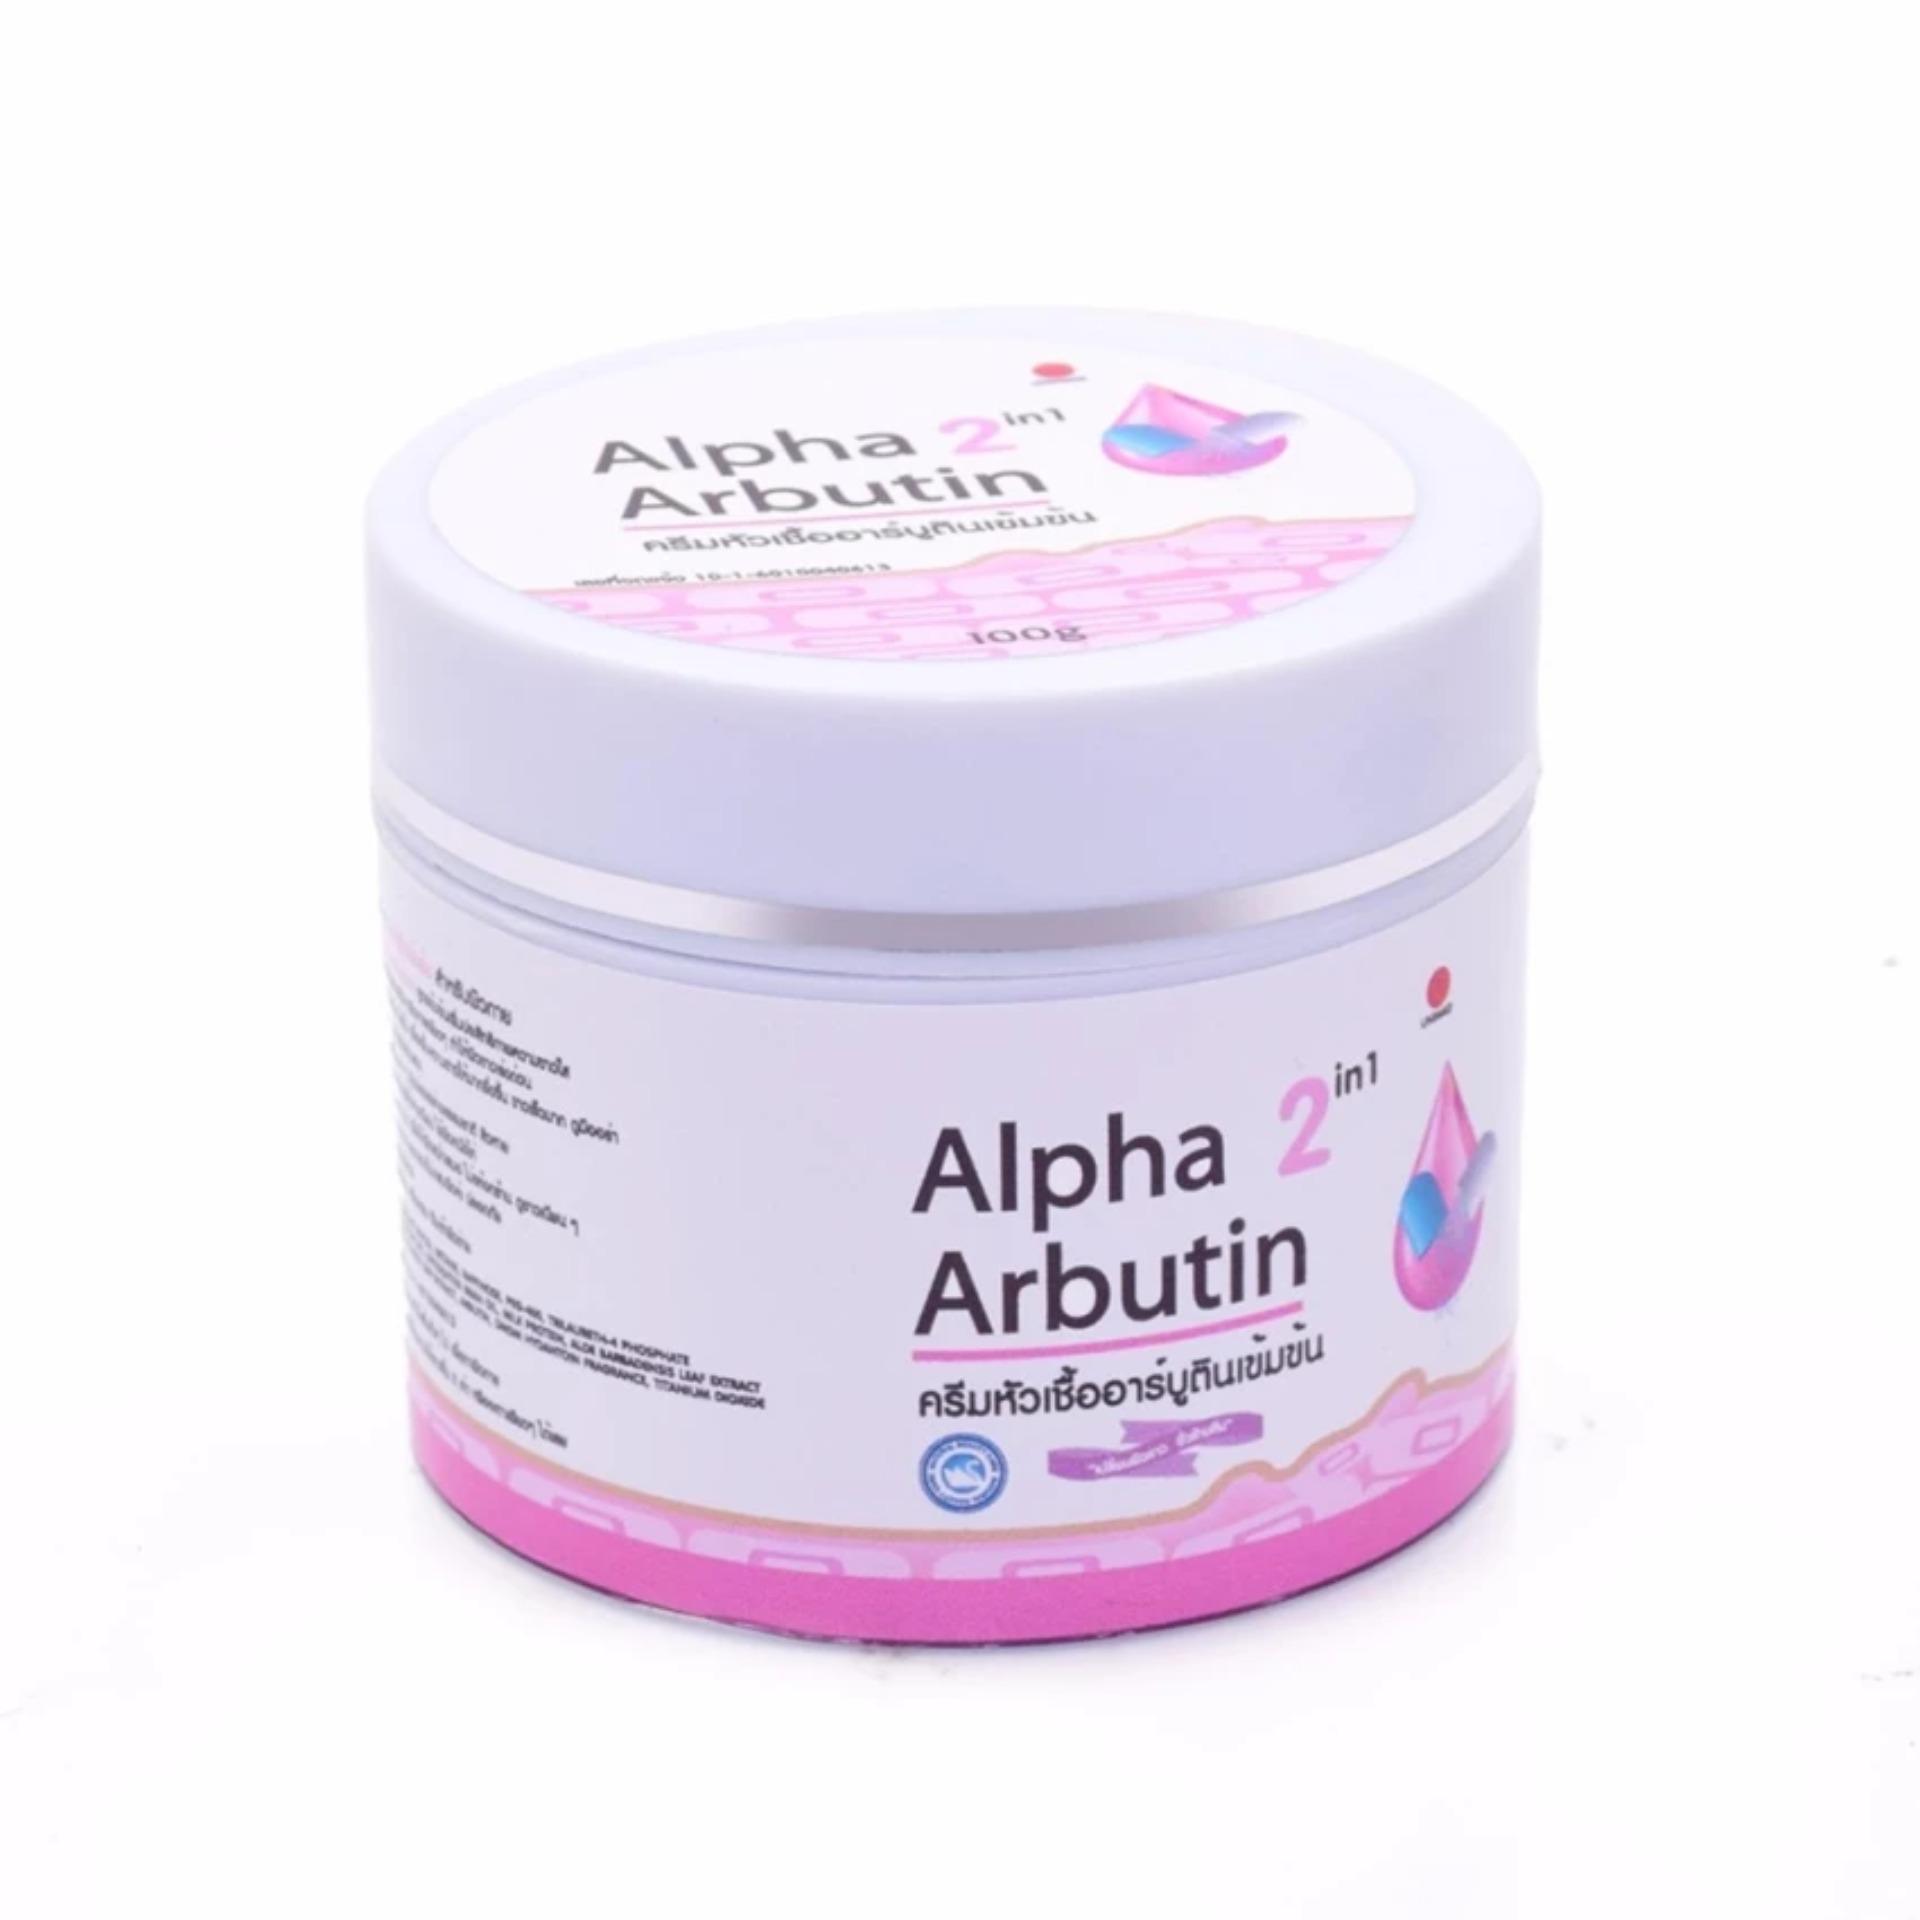 Kem dưỡng trắng da Alpha Arbutin 2 In 1 Thái Lan